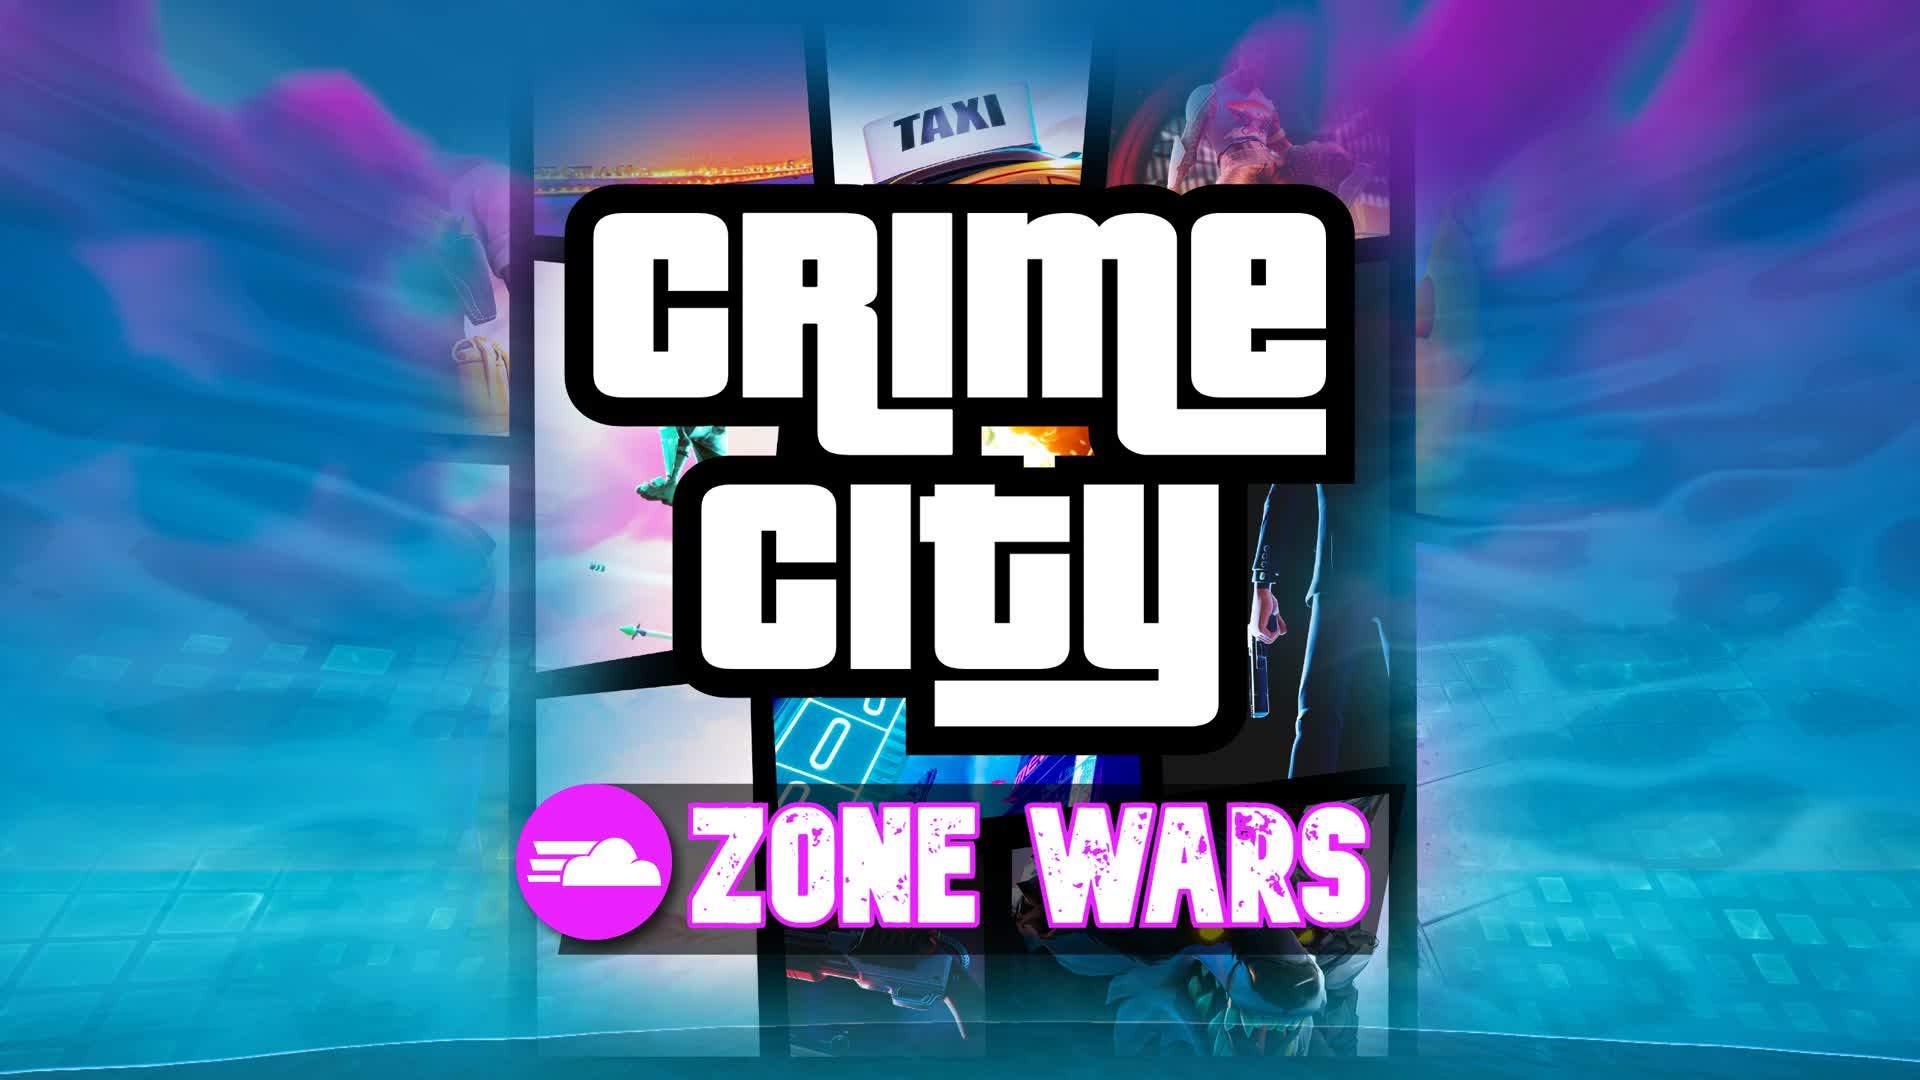 CRIME ZONE WARS 🚨